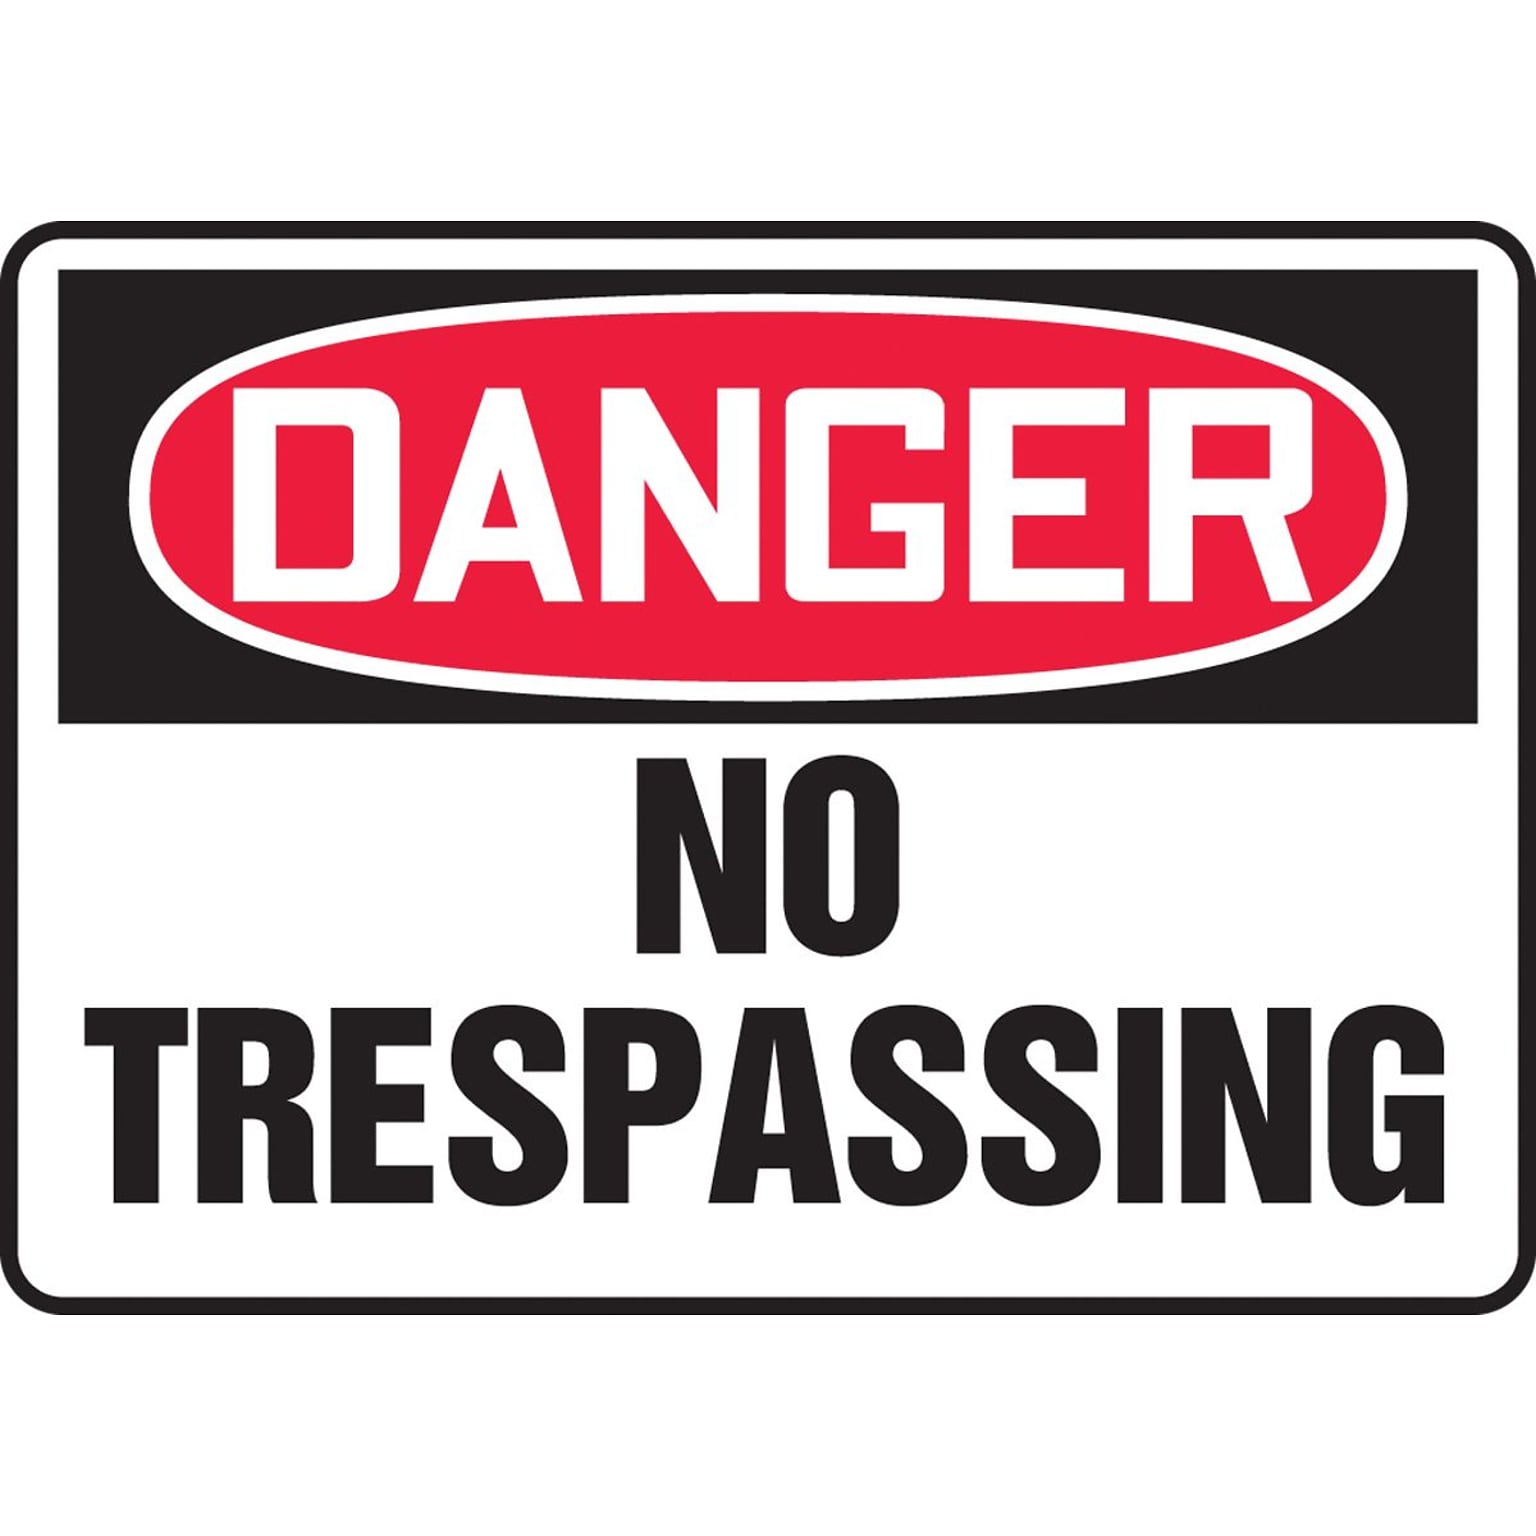 Accuform 7 x 10 Aluminum Safety Sign DANGER NO TRESPASSING, Red/Black On White (MADM292VA)